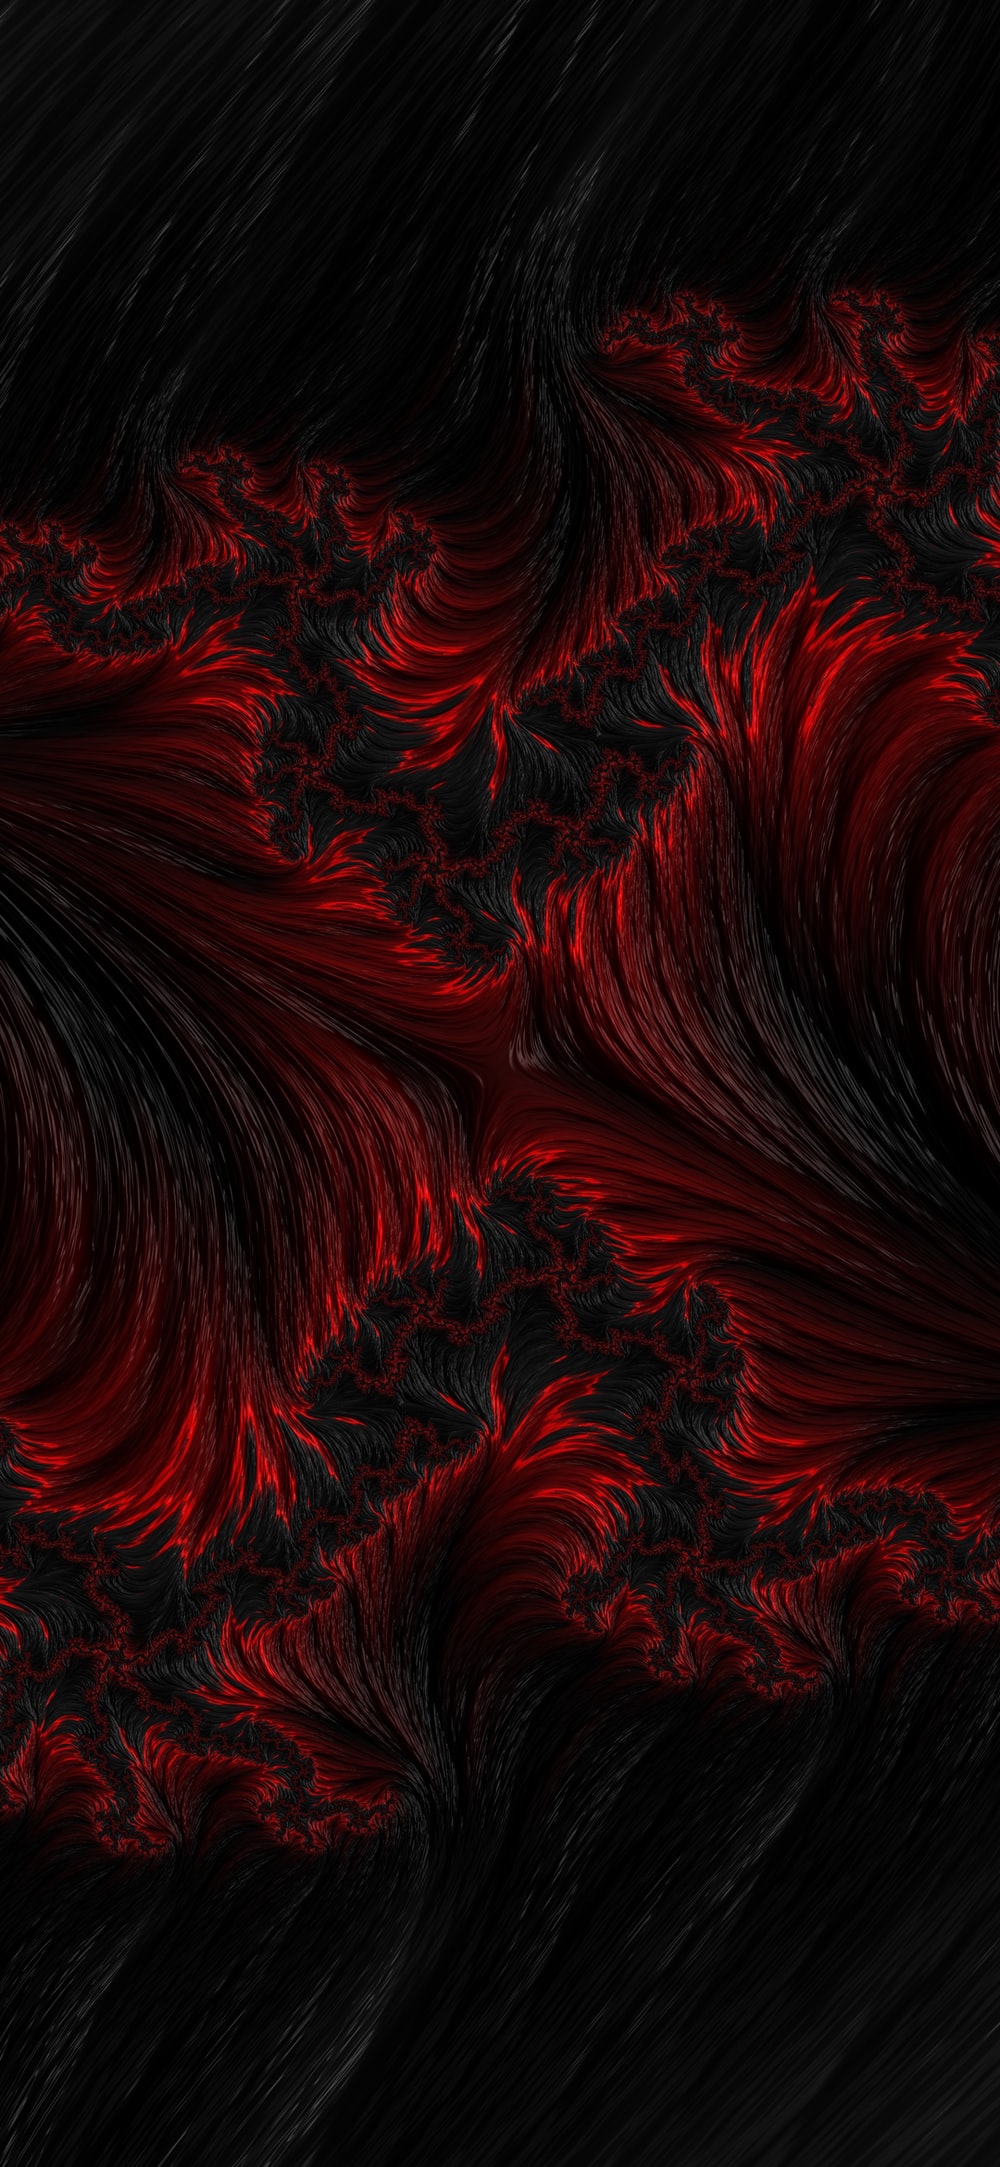 Aesthetic Red And Black Wallpapers Iphone  PixelsTalkNet